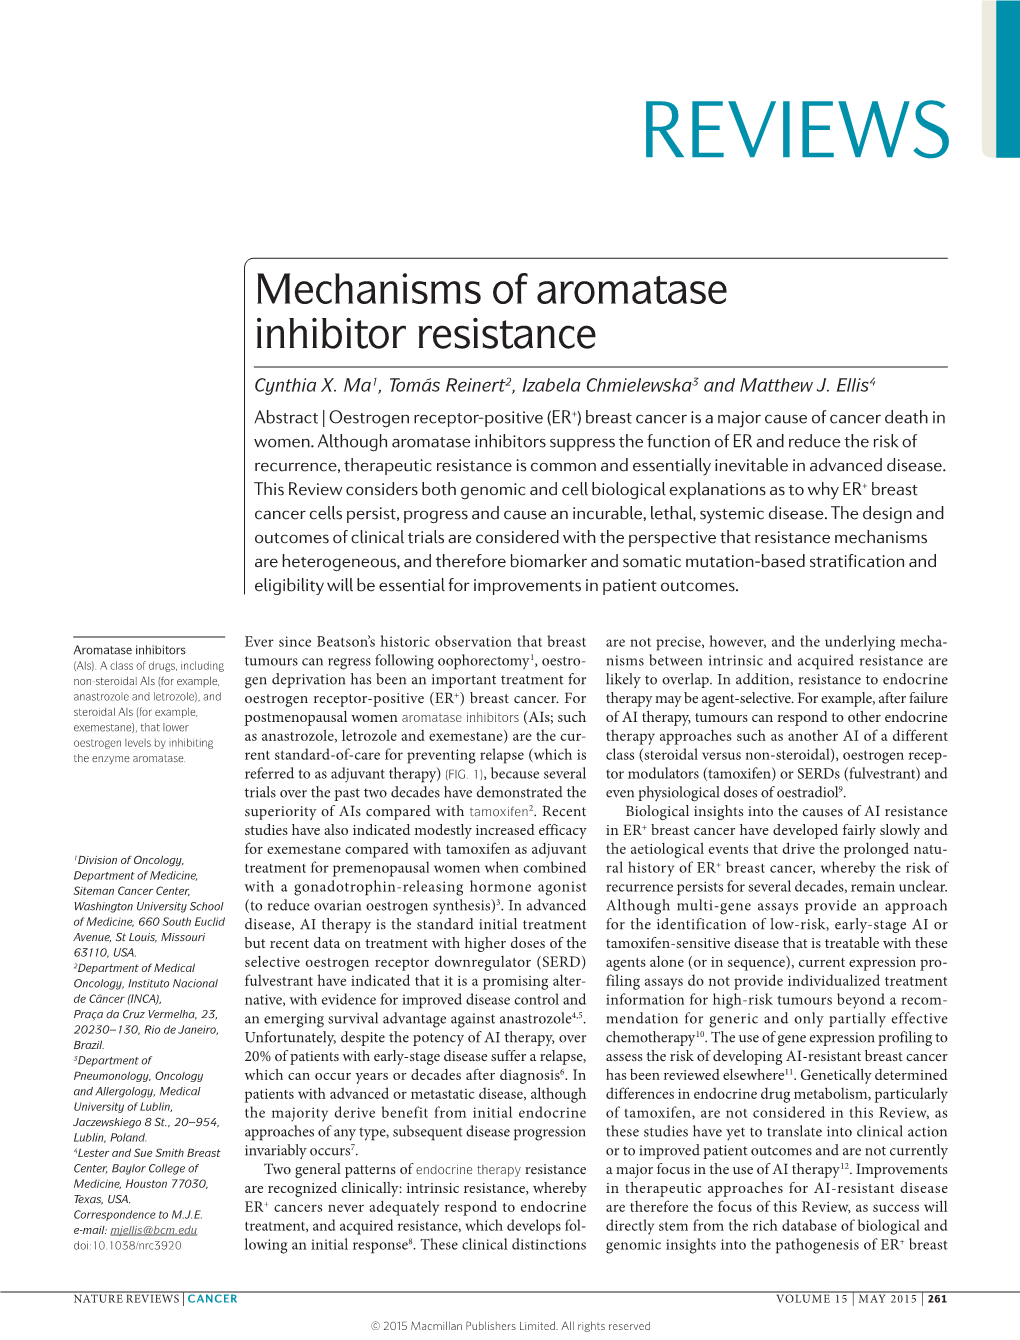 Mechanisms of Aromatase Inhibitor Resistance